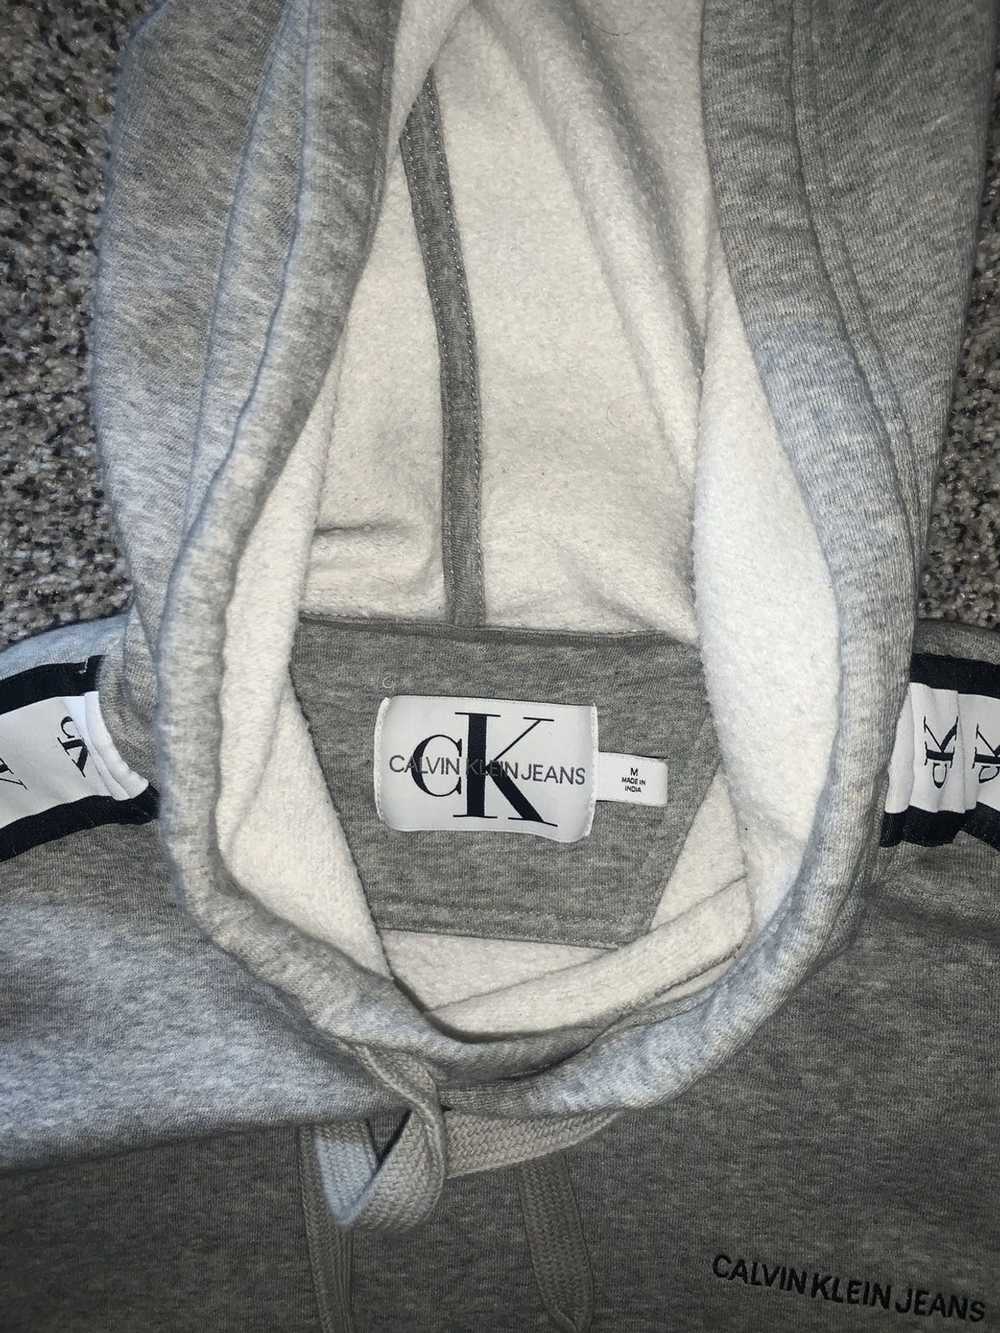 Calvin Klein Calvin Klein jeans logo hoodie - image 4